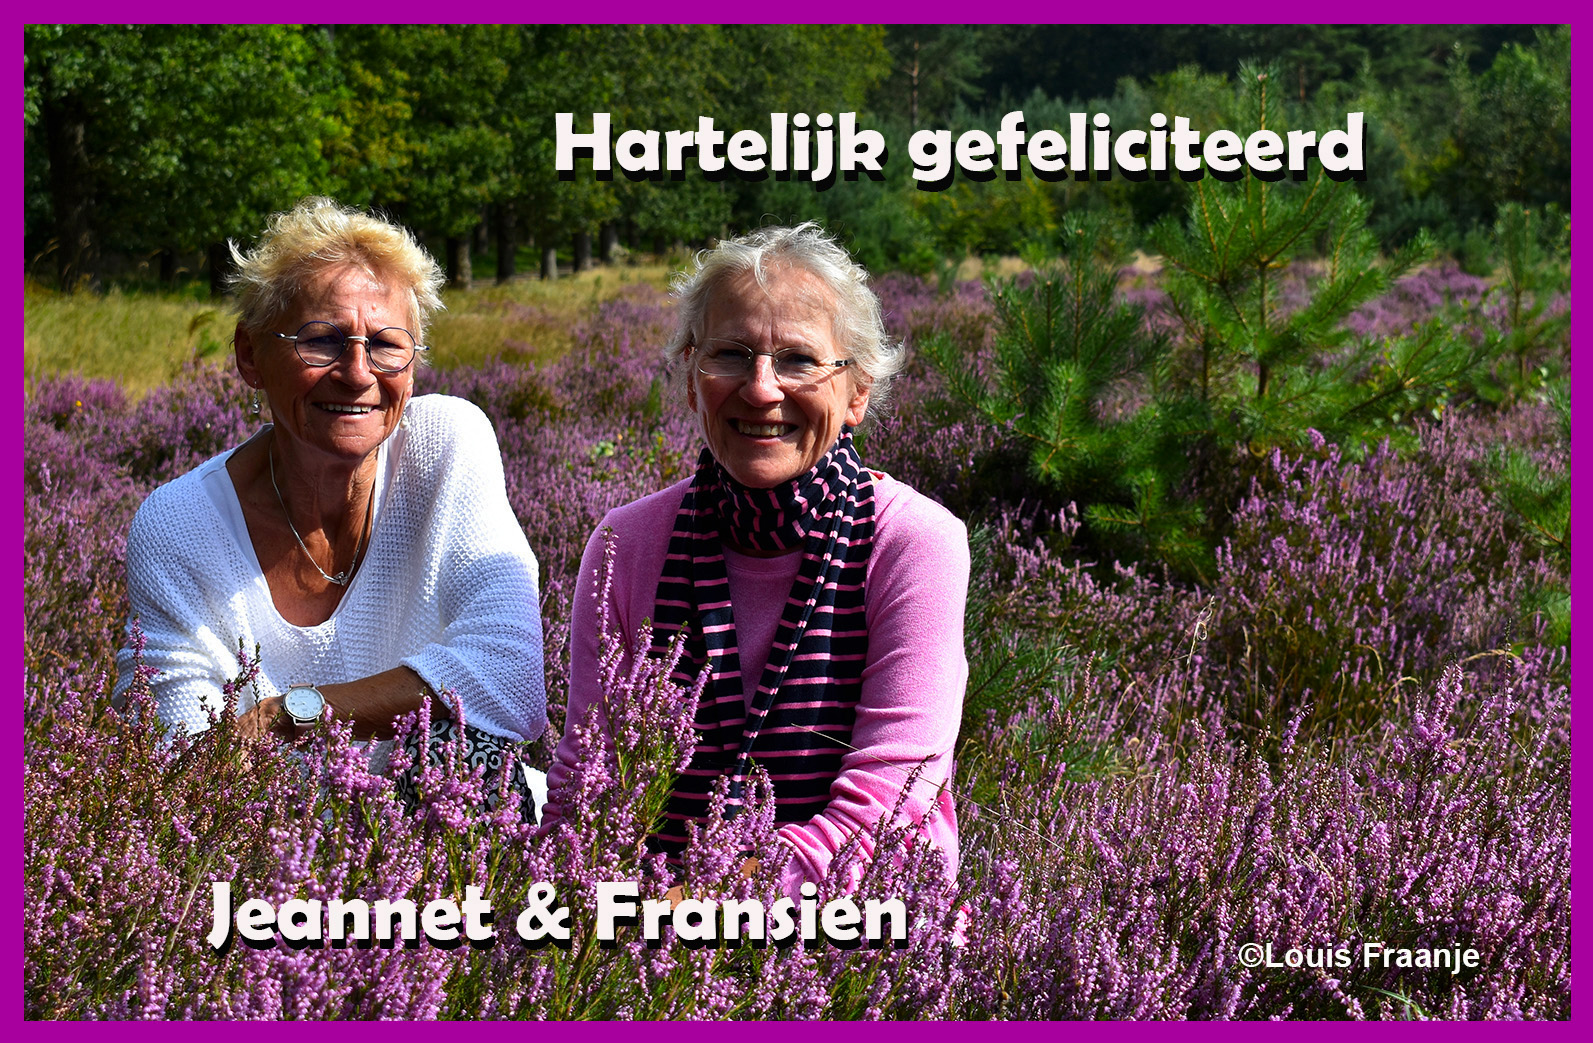 De tweelingzussen Jeannet en Fransien afgelopen zomer in de bloeiende heide - Foto: ©Louis Fraanje